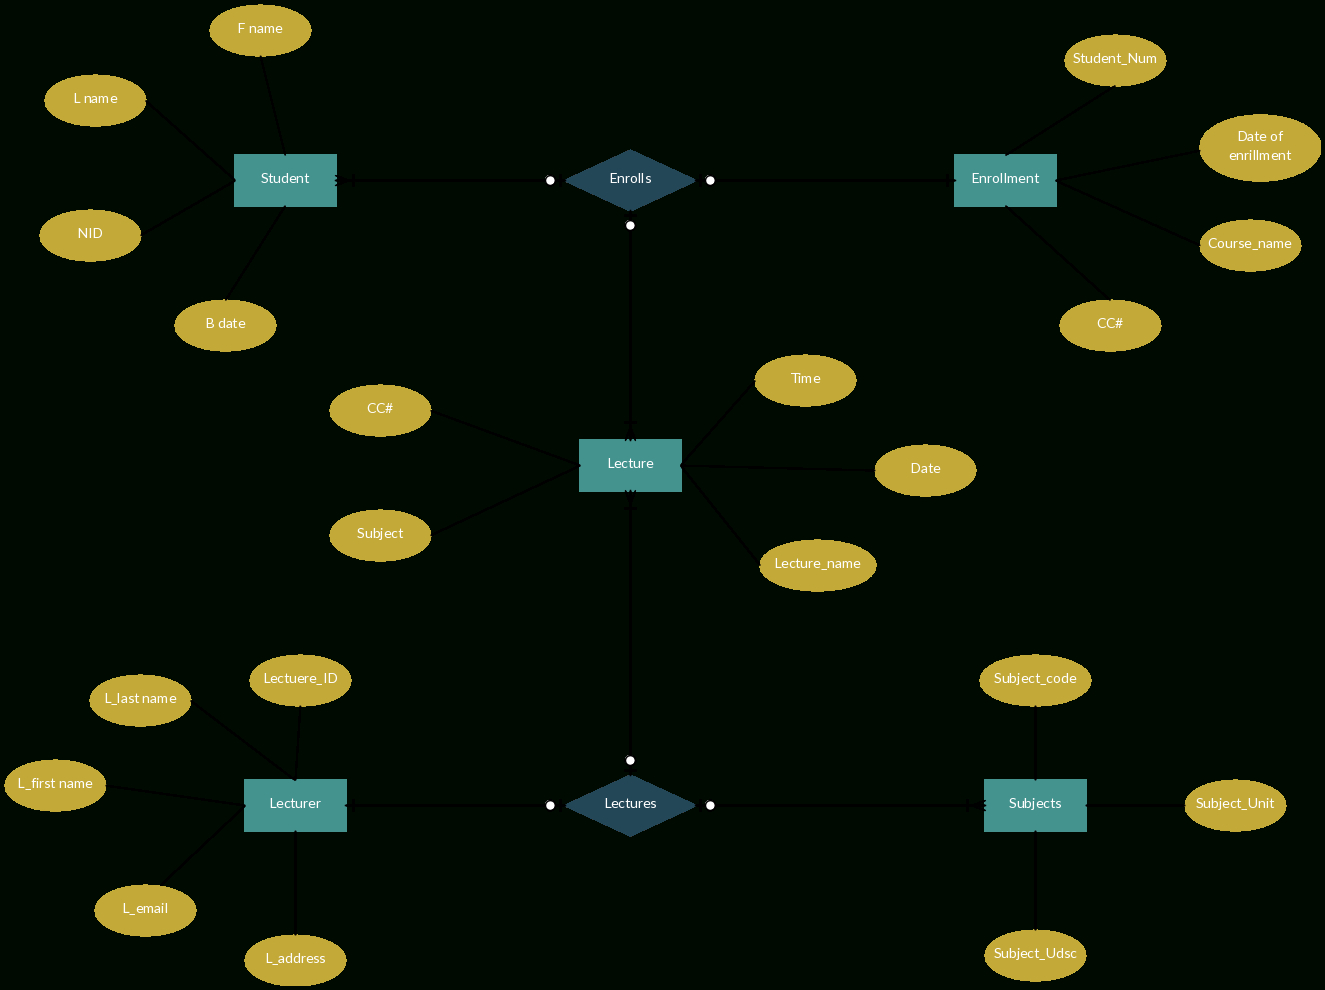 Entity Relationship Diagram For Collage Enrollment System | Online regarding Entity Relationship Diagram Example University